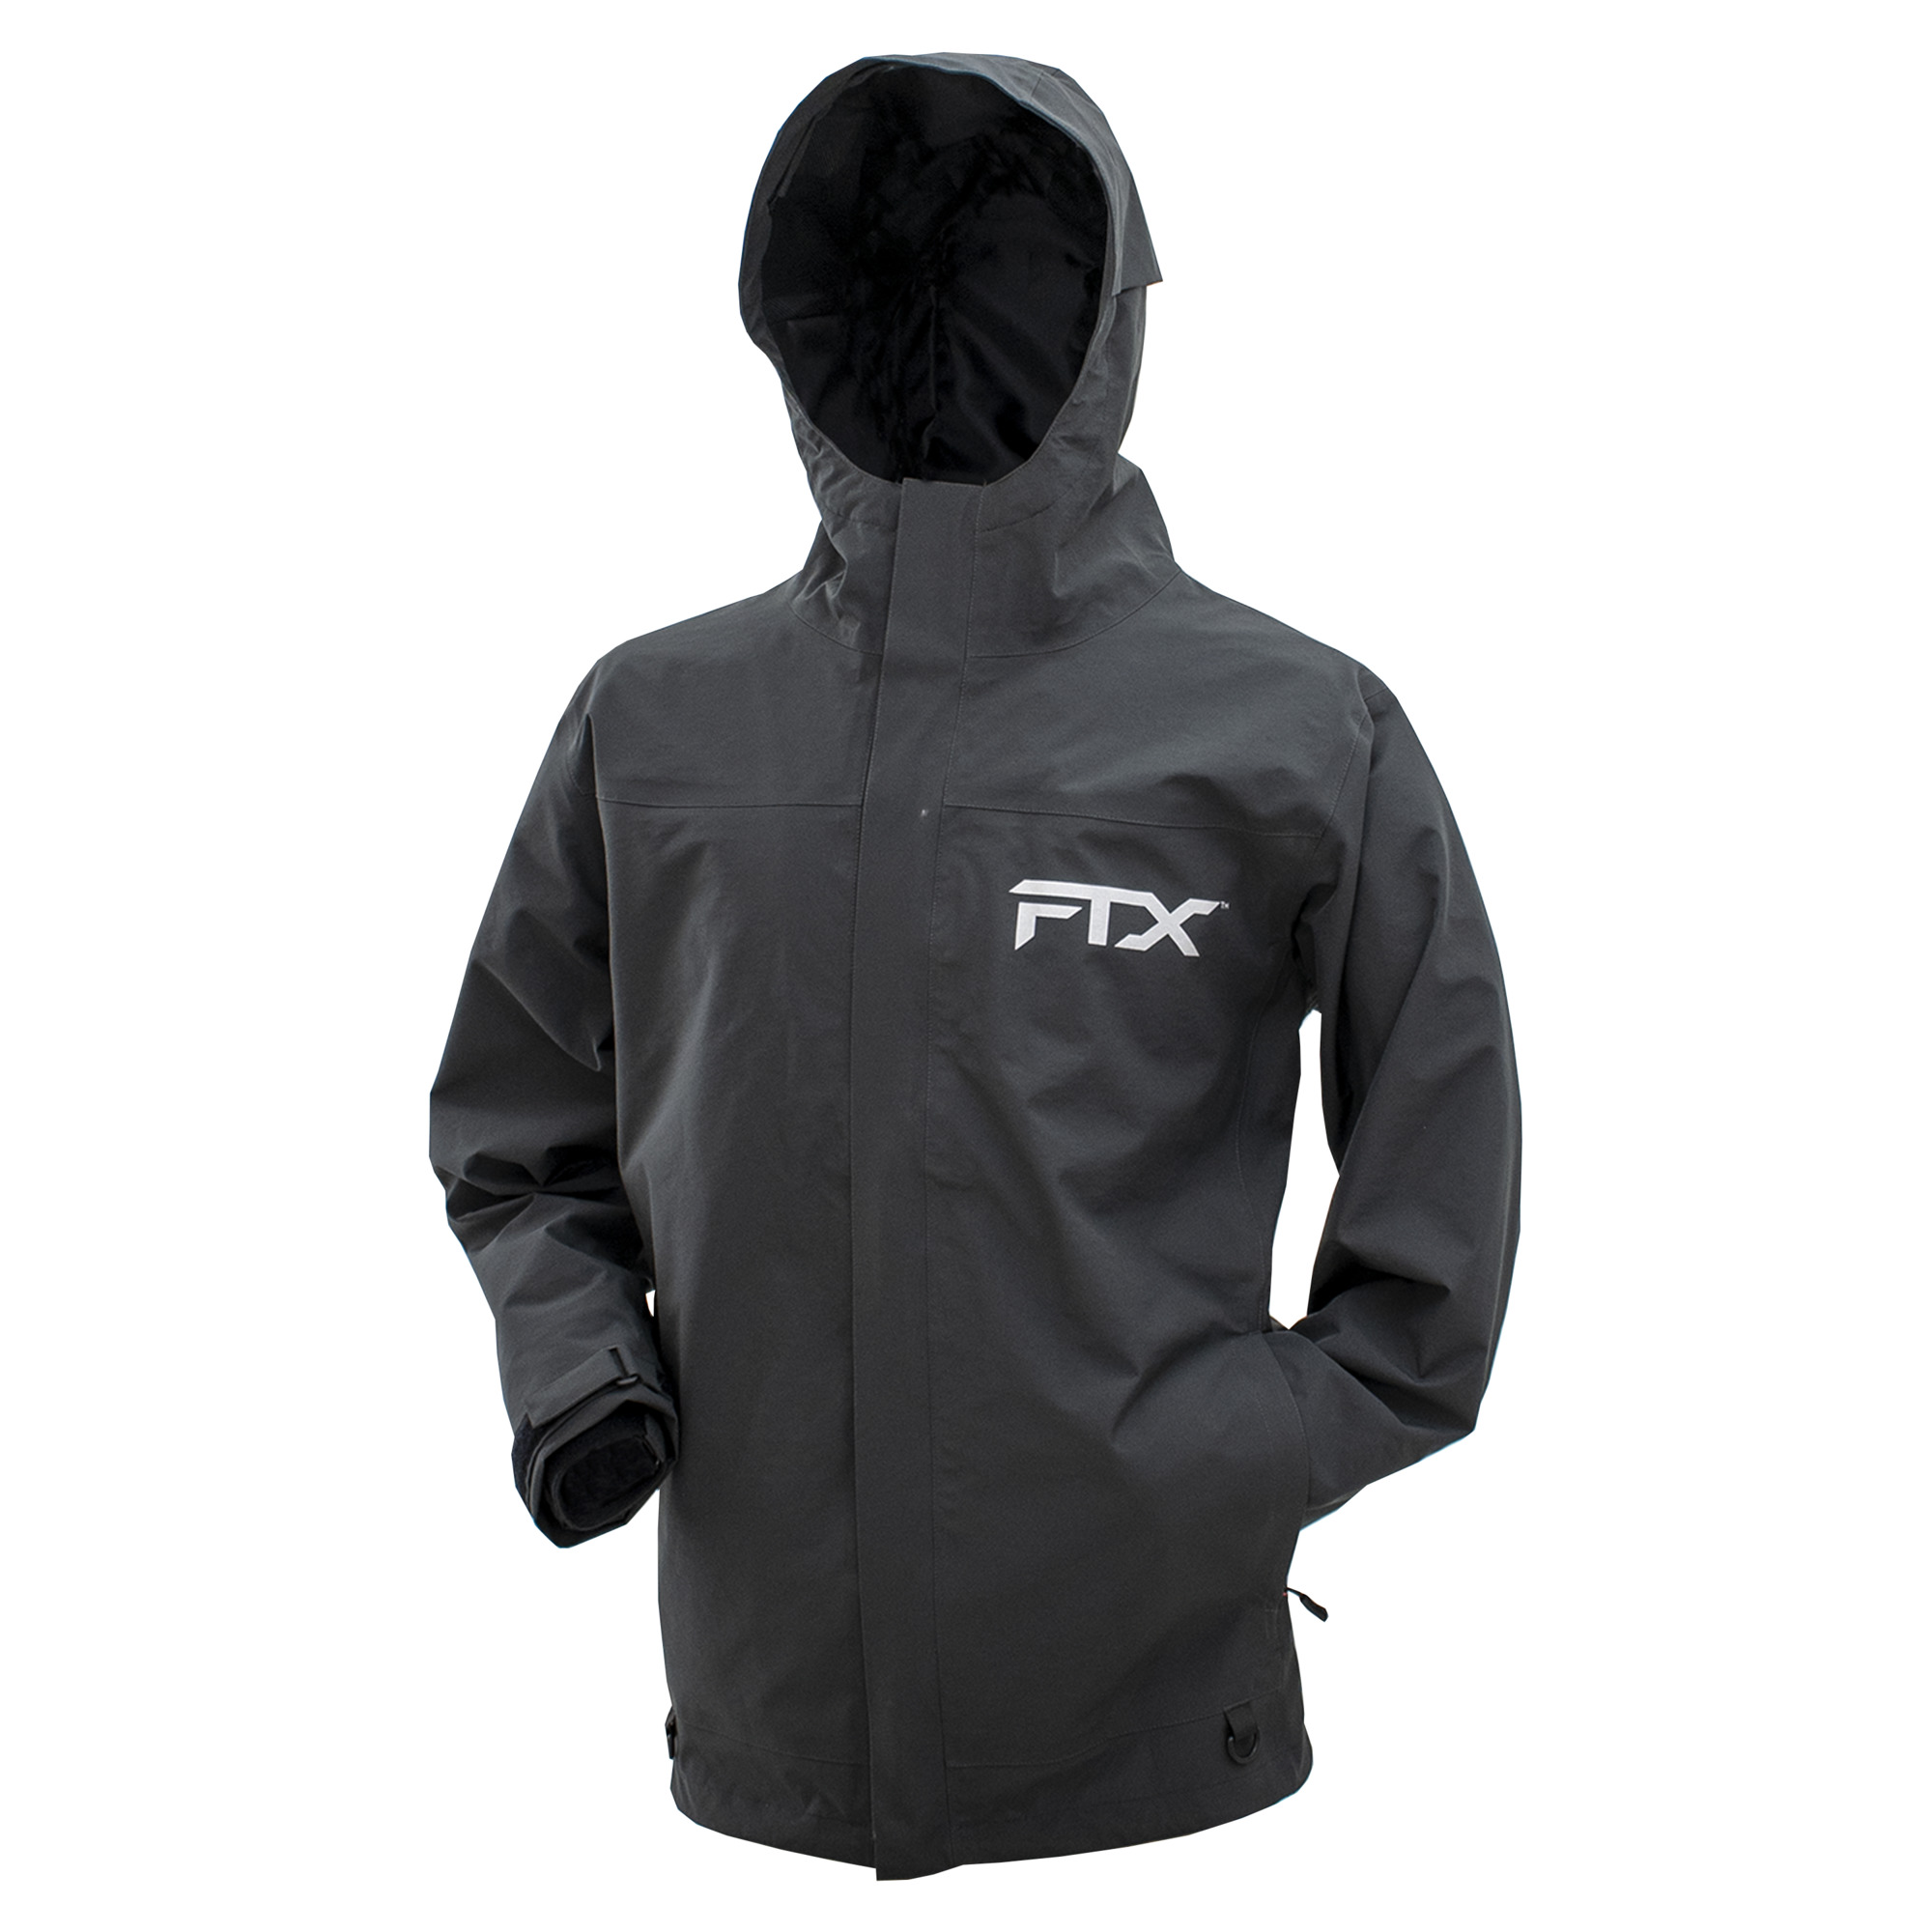 frogg toggs, FTX Armor Jacket, Size 3XL, Color Dark Graphite, Model 1FA611-112-3X